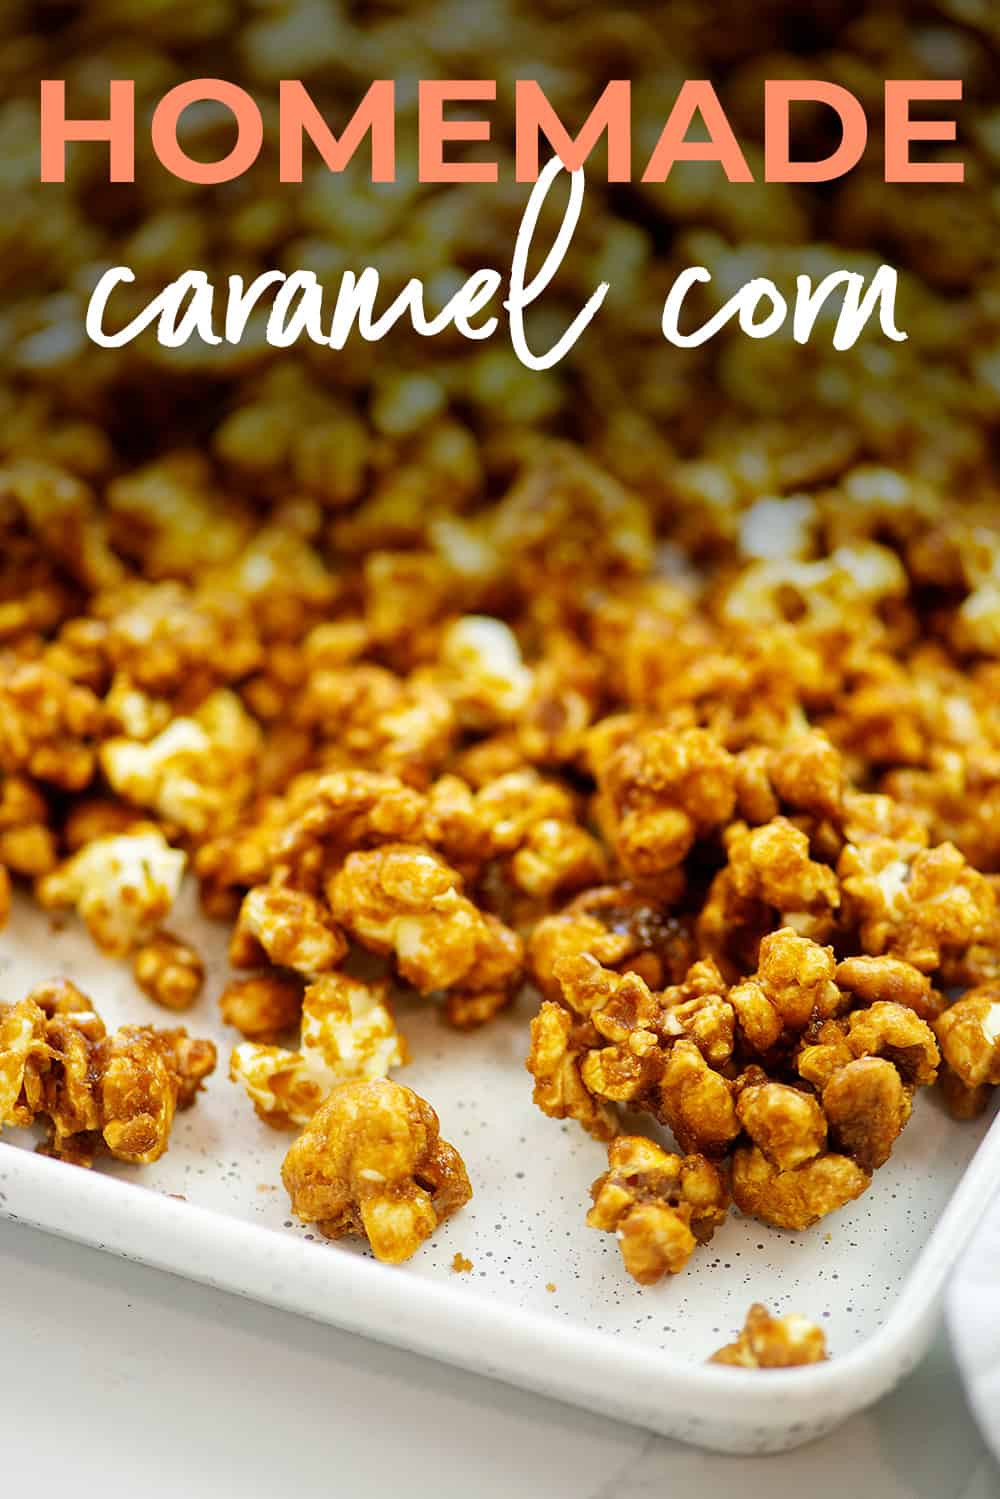 Homemade caramel corn on baking sheet.